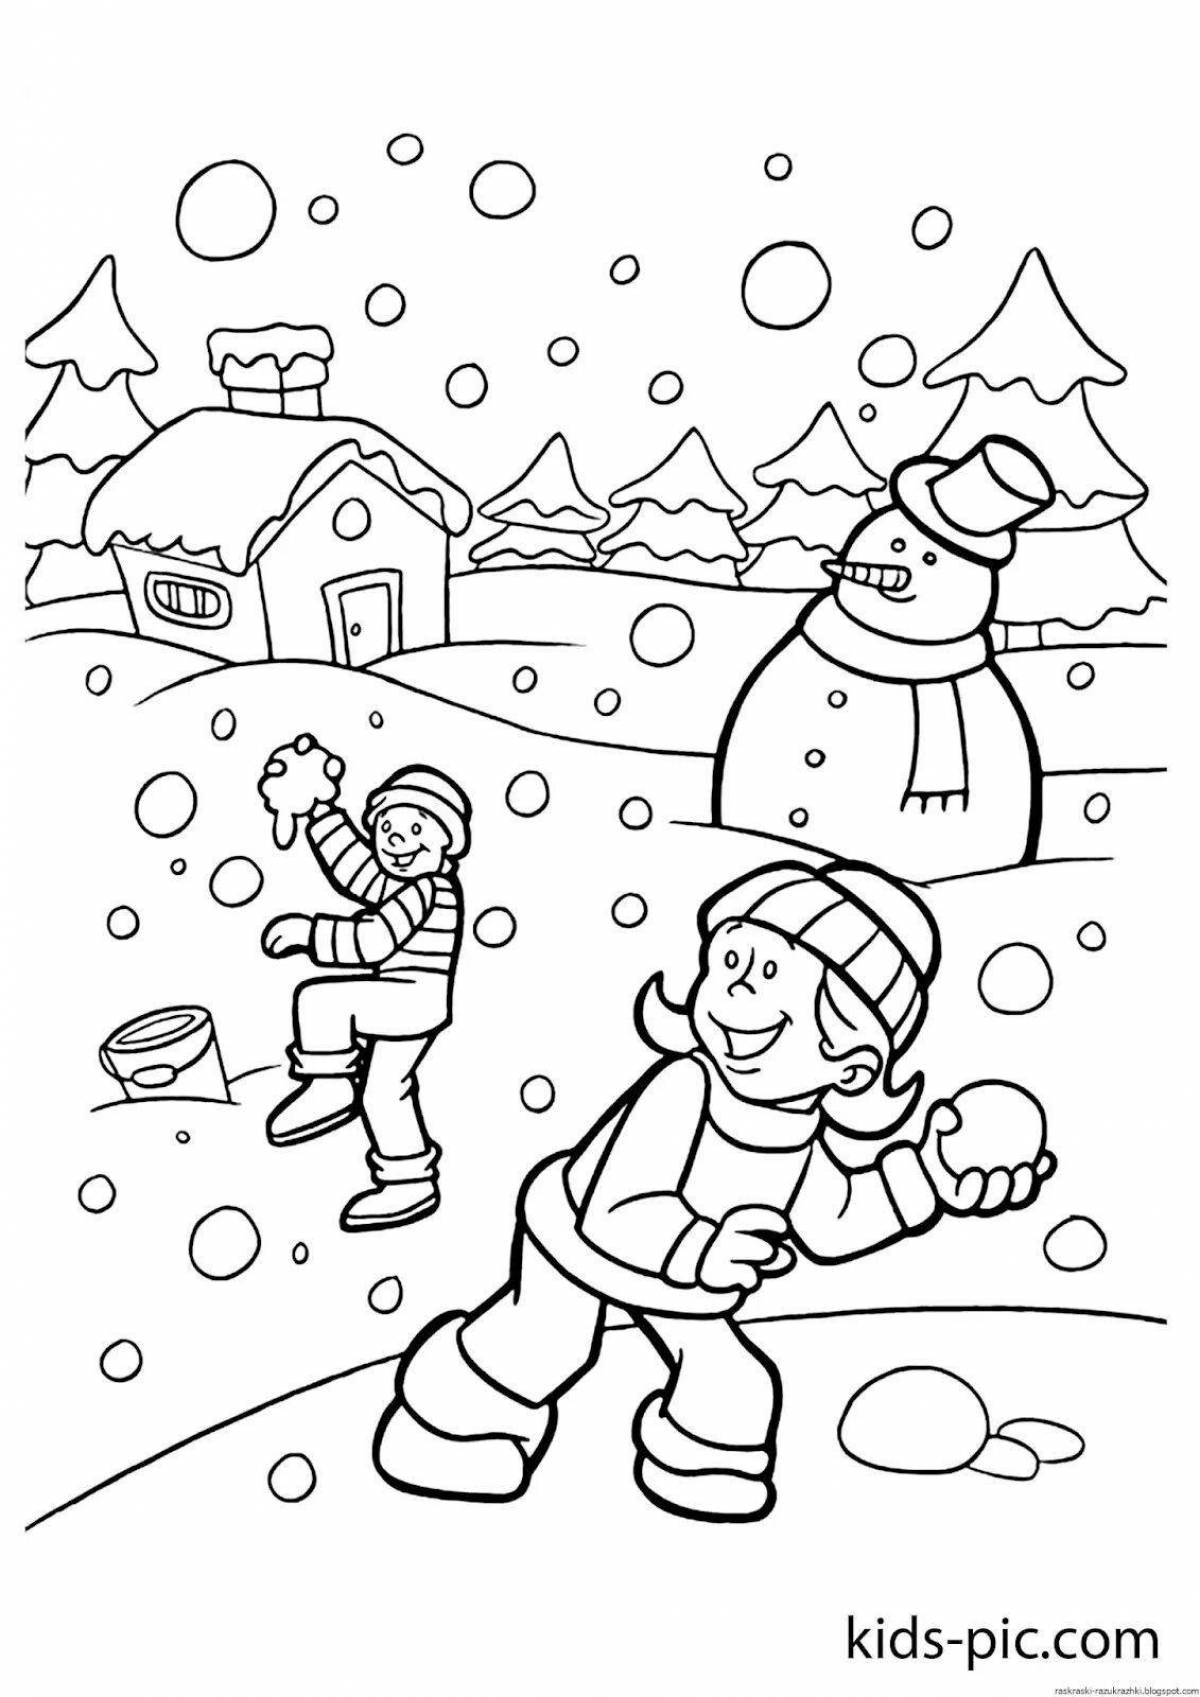 Fantastic winter coloring book